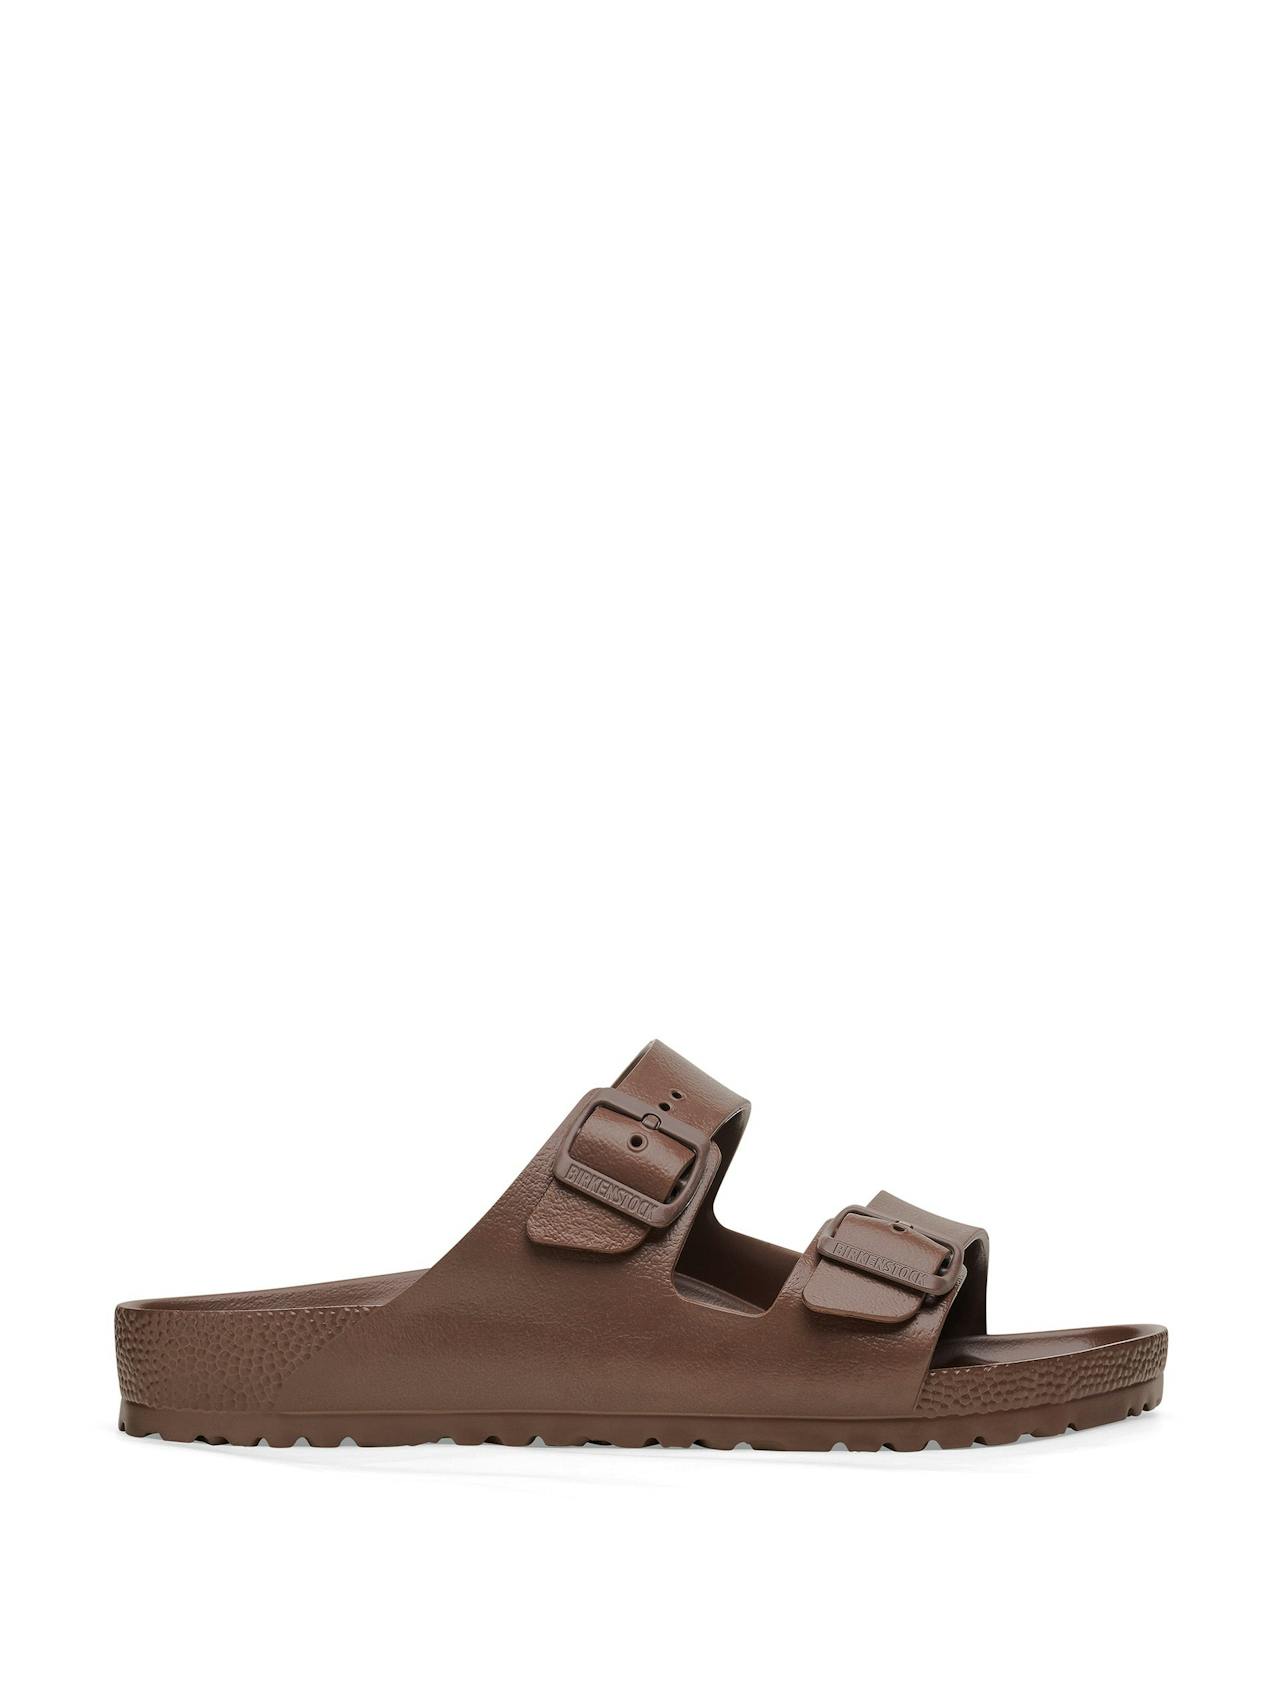 Arizona eva sandals in brown